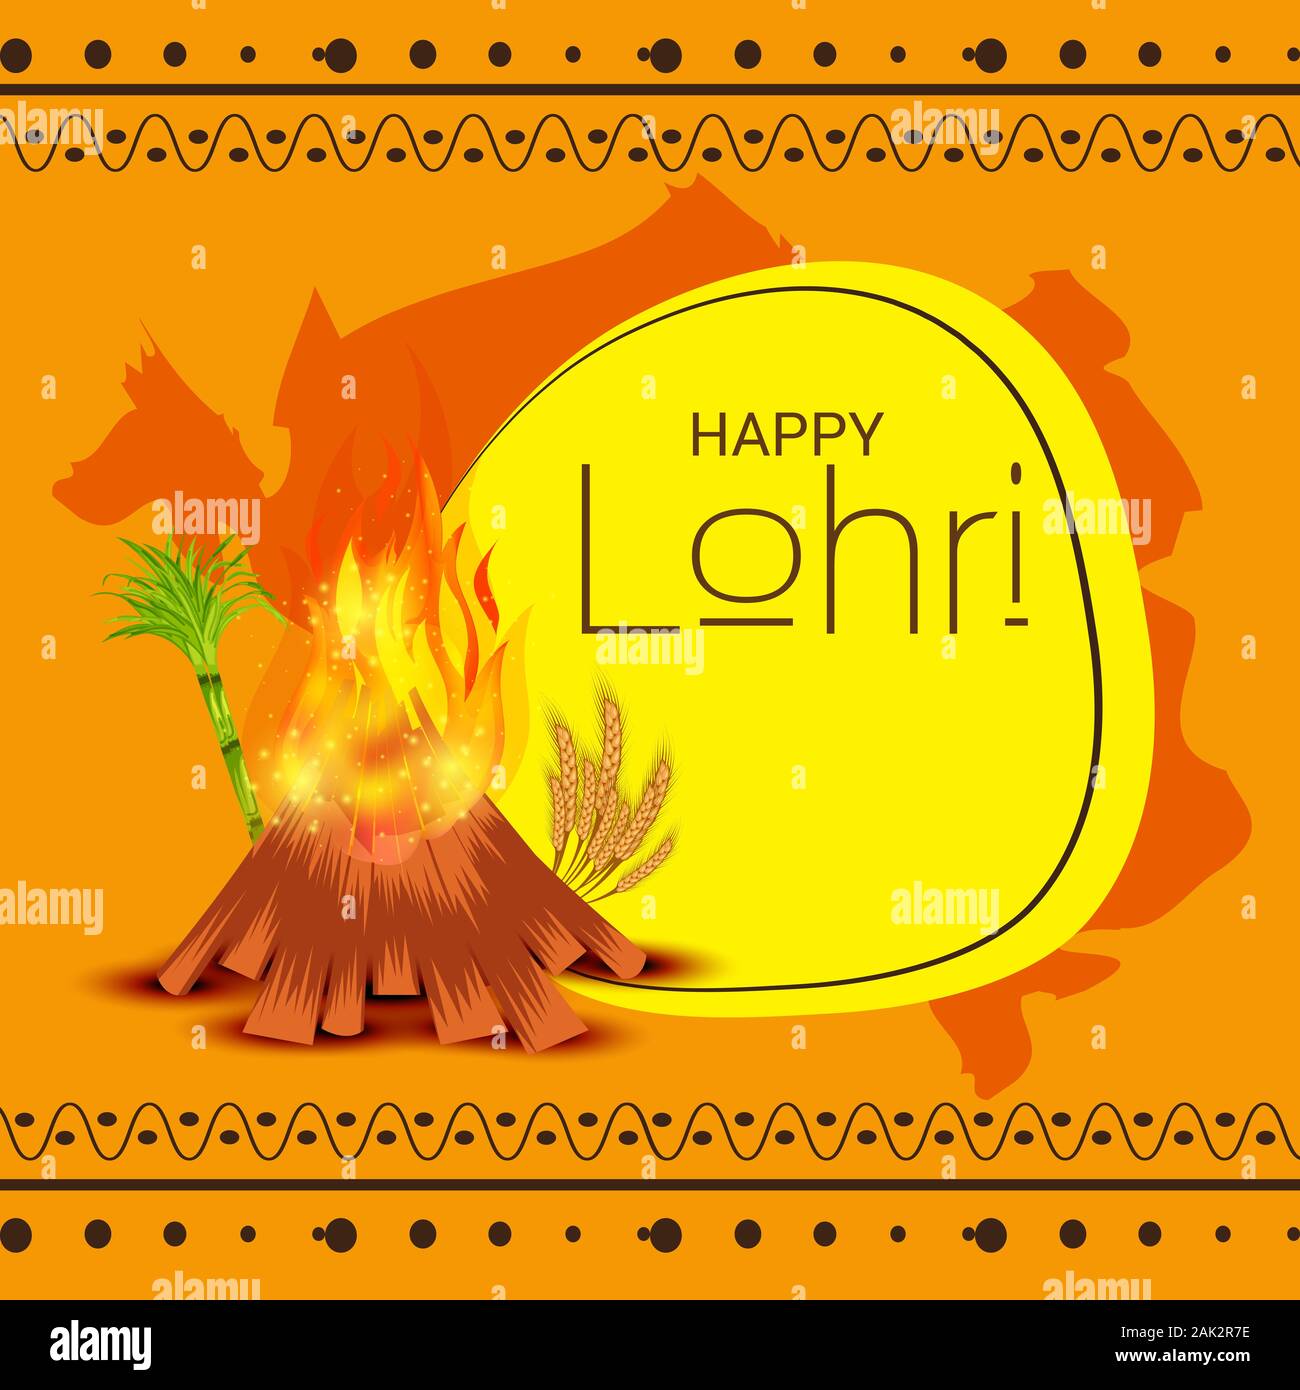 Vector illustration of a Holiday Background for Punjabi Festival Happy Lohri  Stock Photo - Alamy